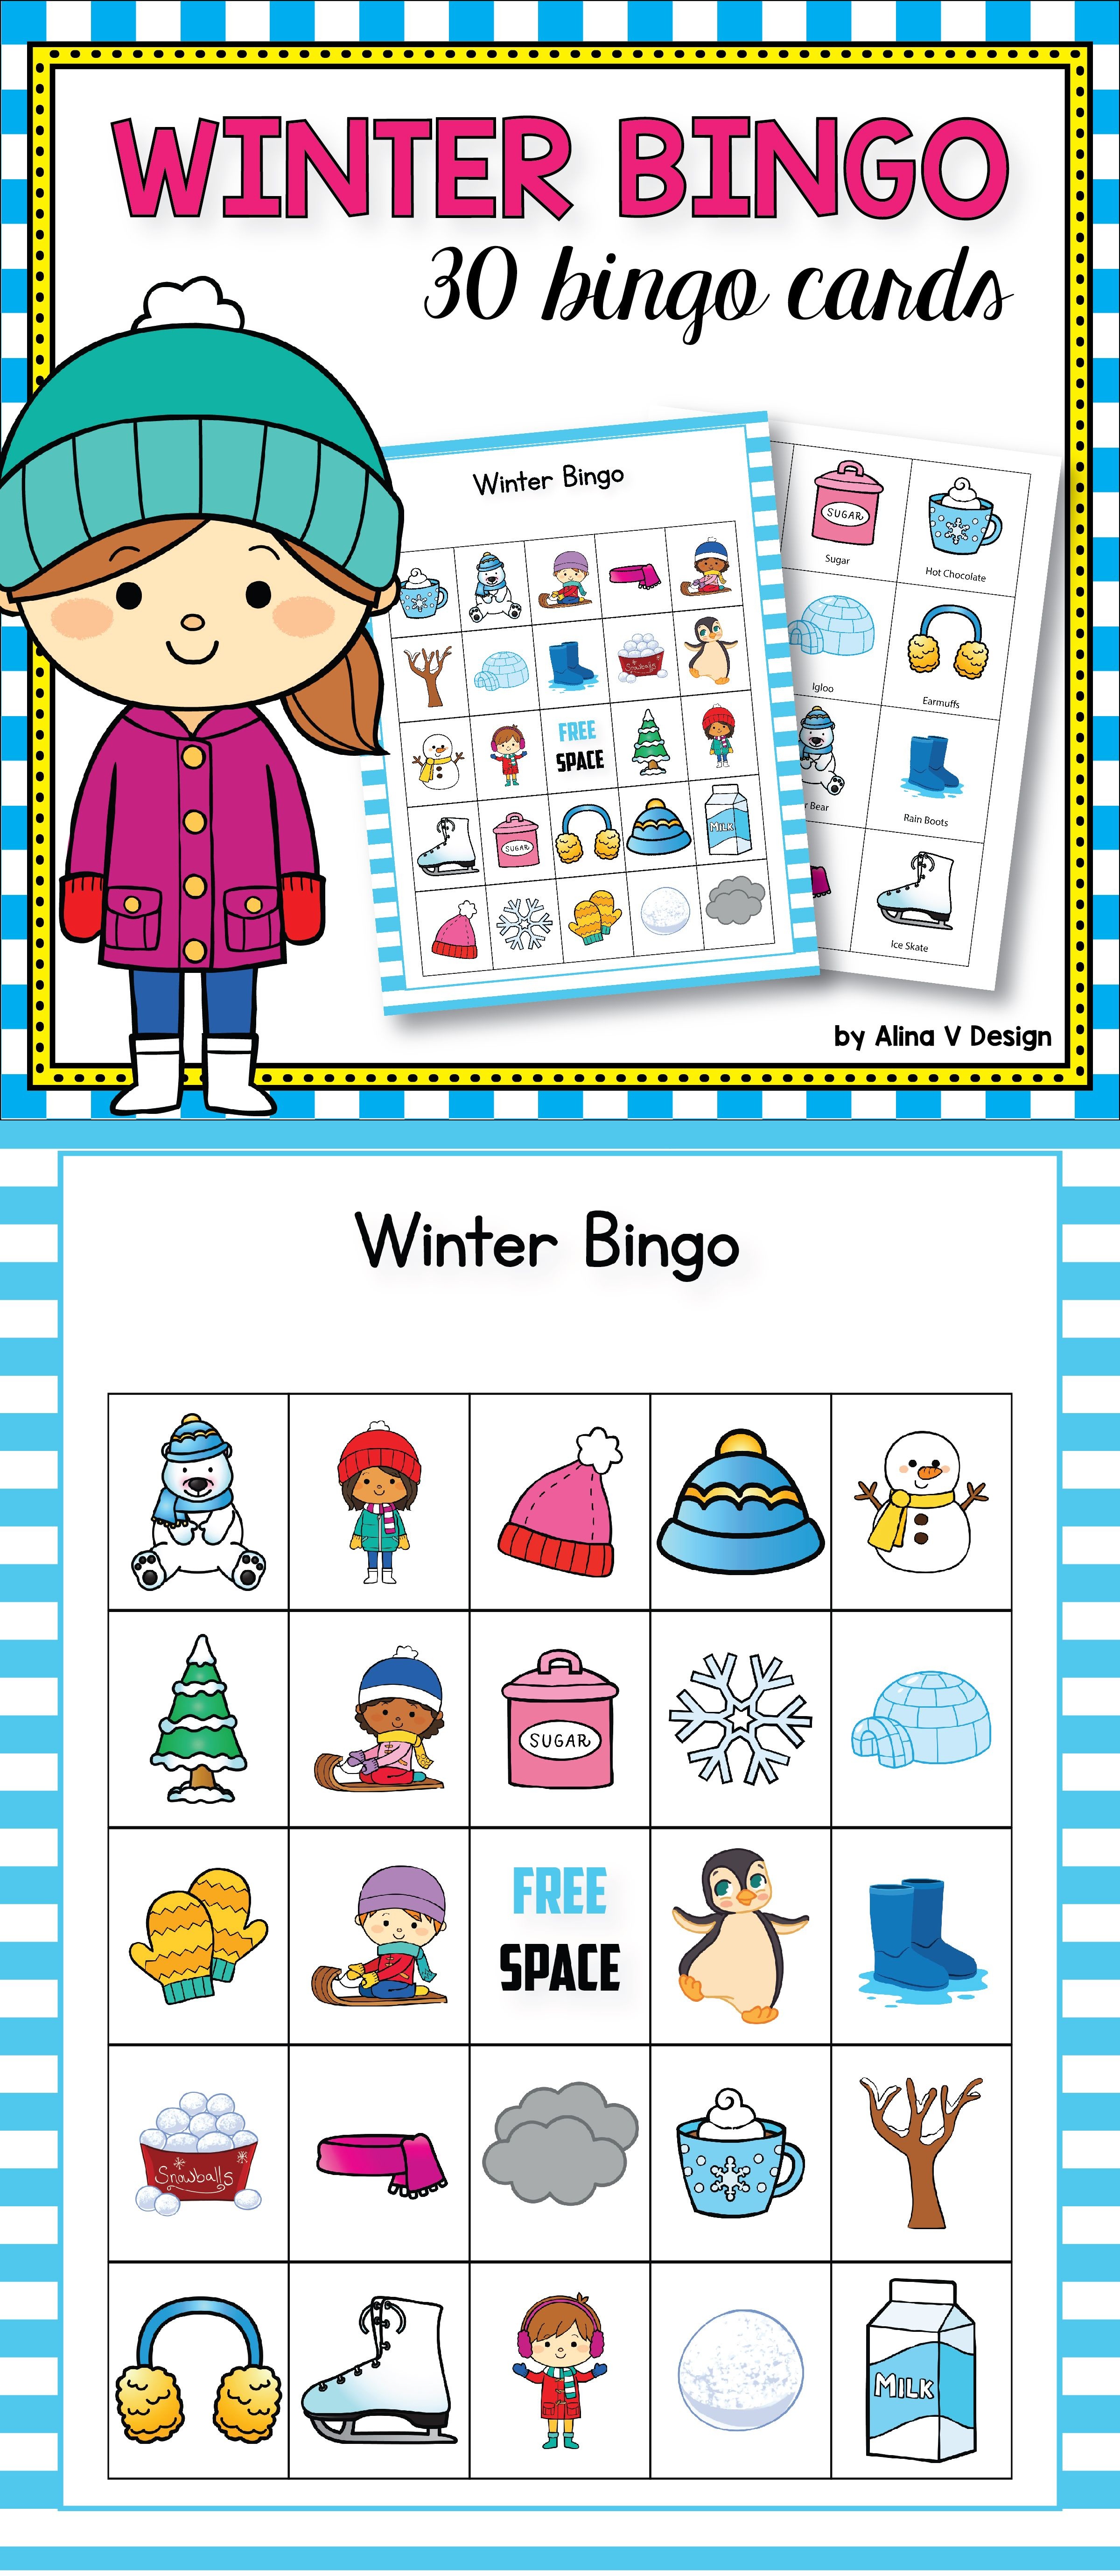 Free Winter Bingo Printable Cards Printable Templates